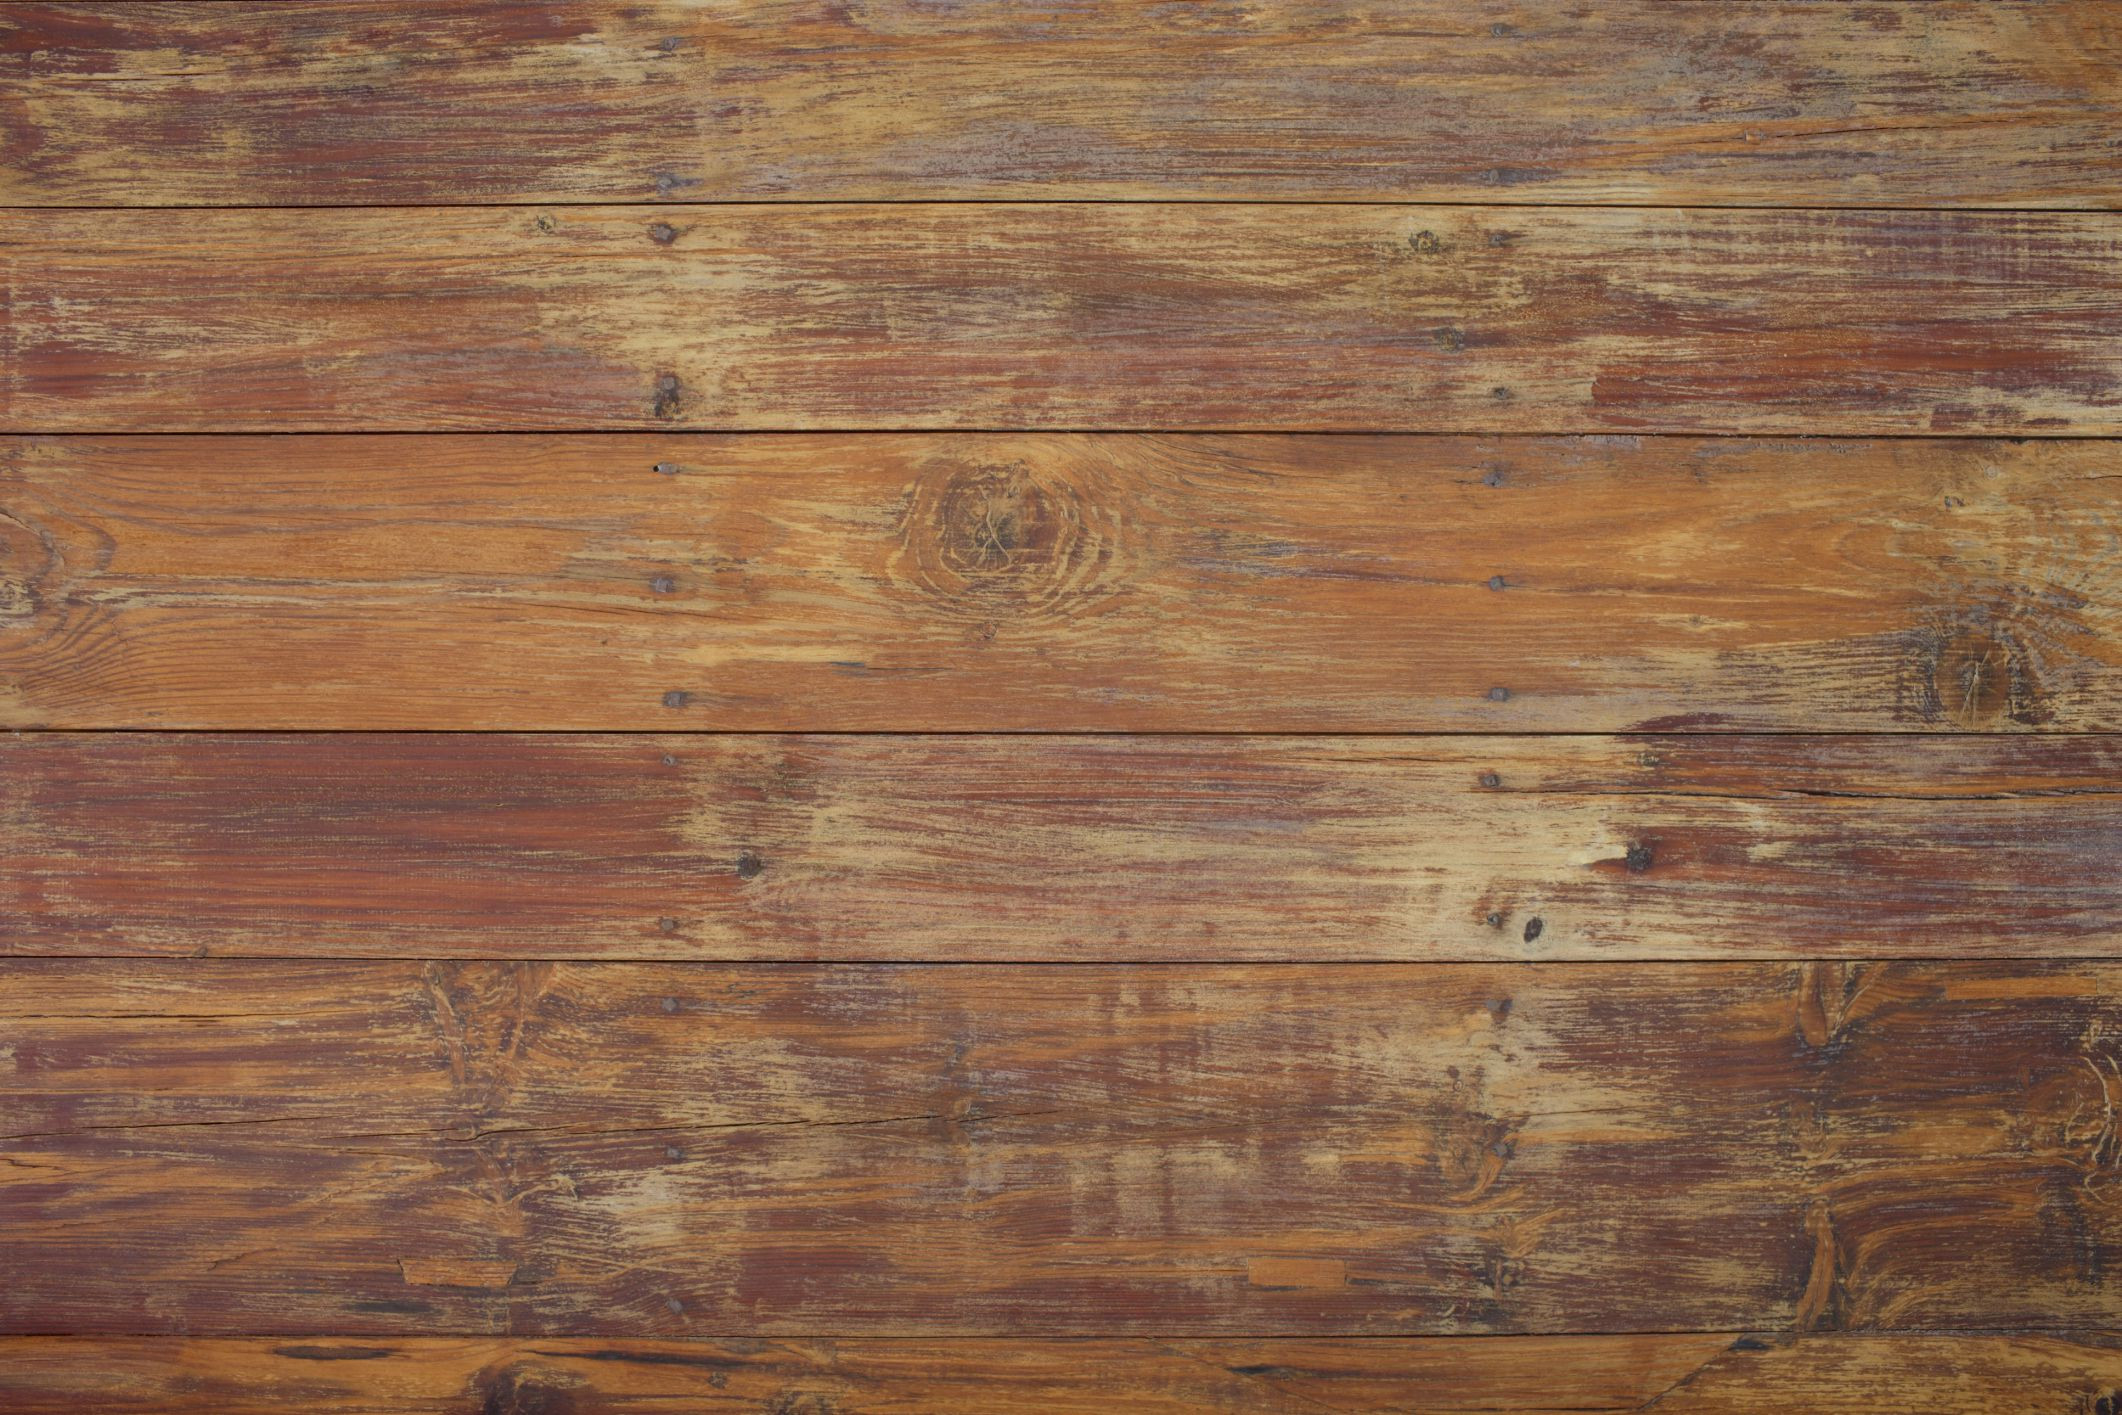 hardwood floor repair gaps in the planks of how to level a slanted sloping floor regarding oldslopingfloor 200378187 001 570d37d25f9b581408747176